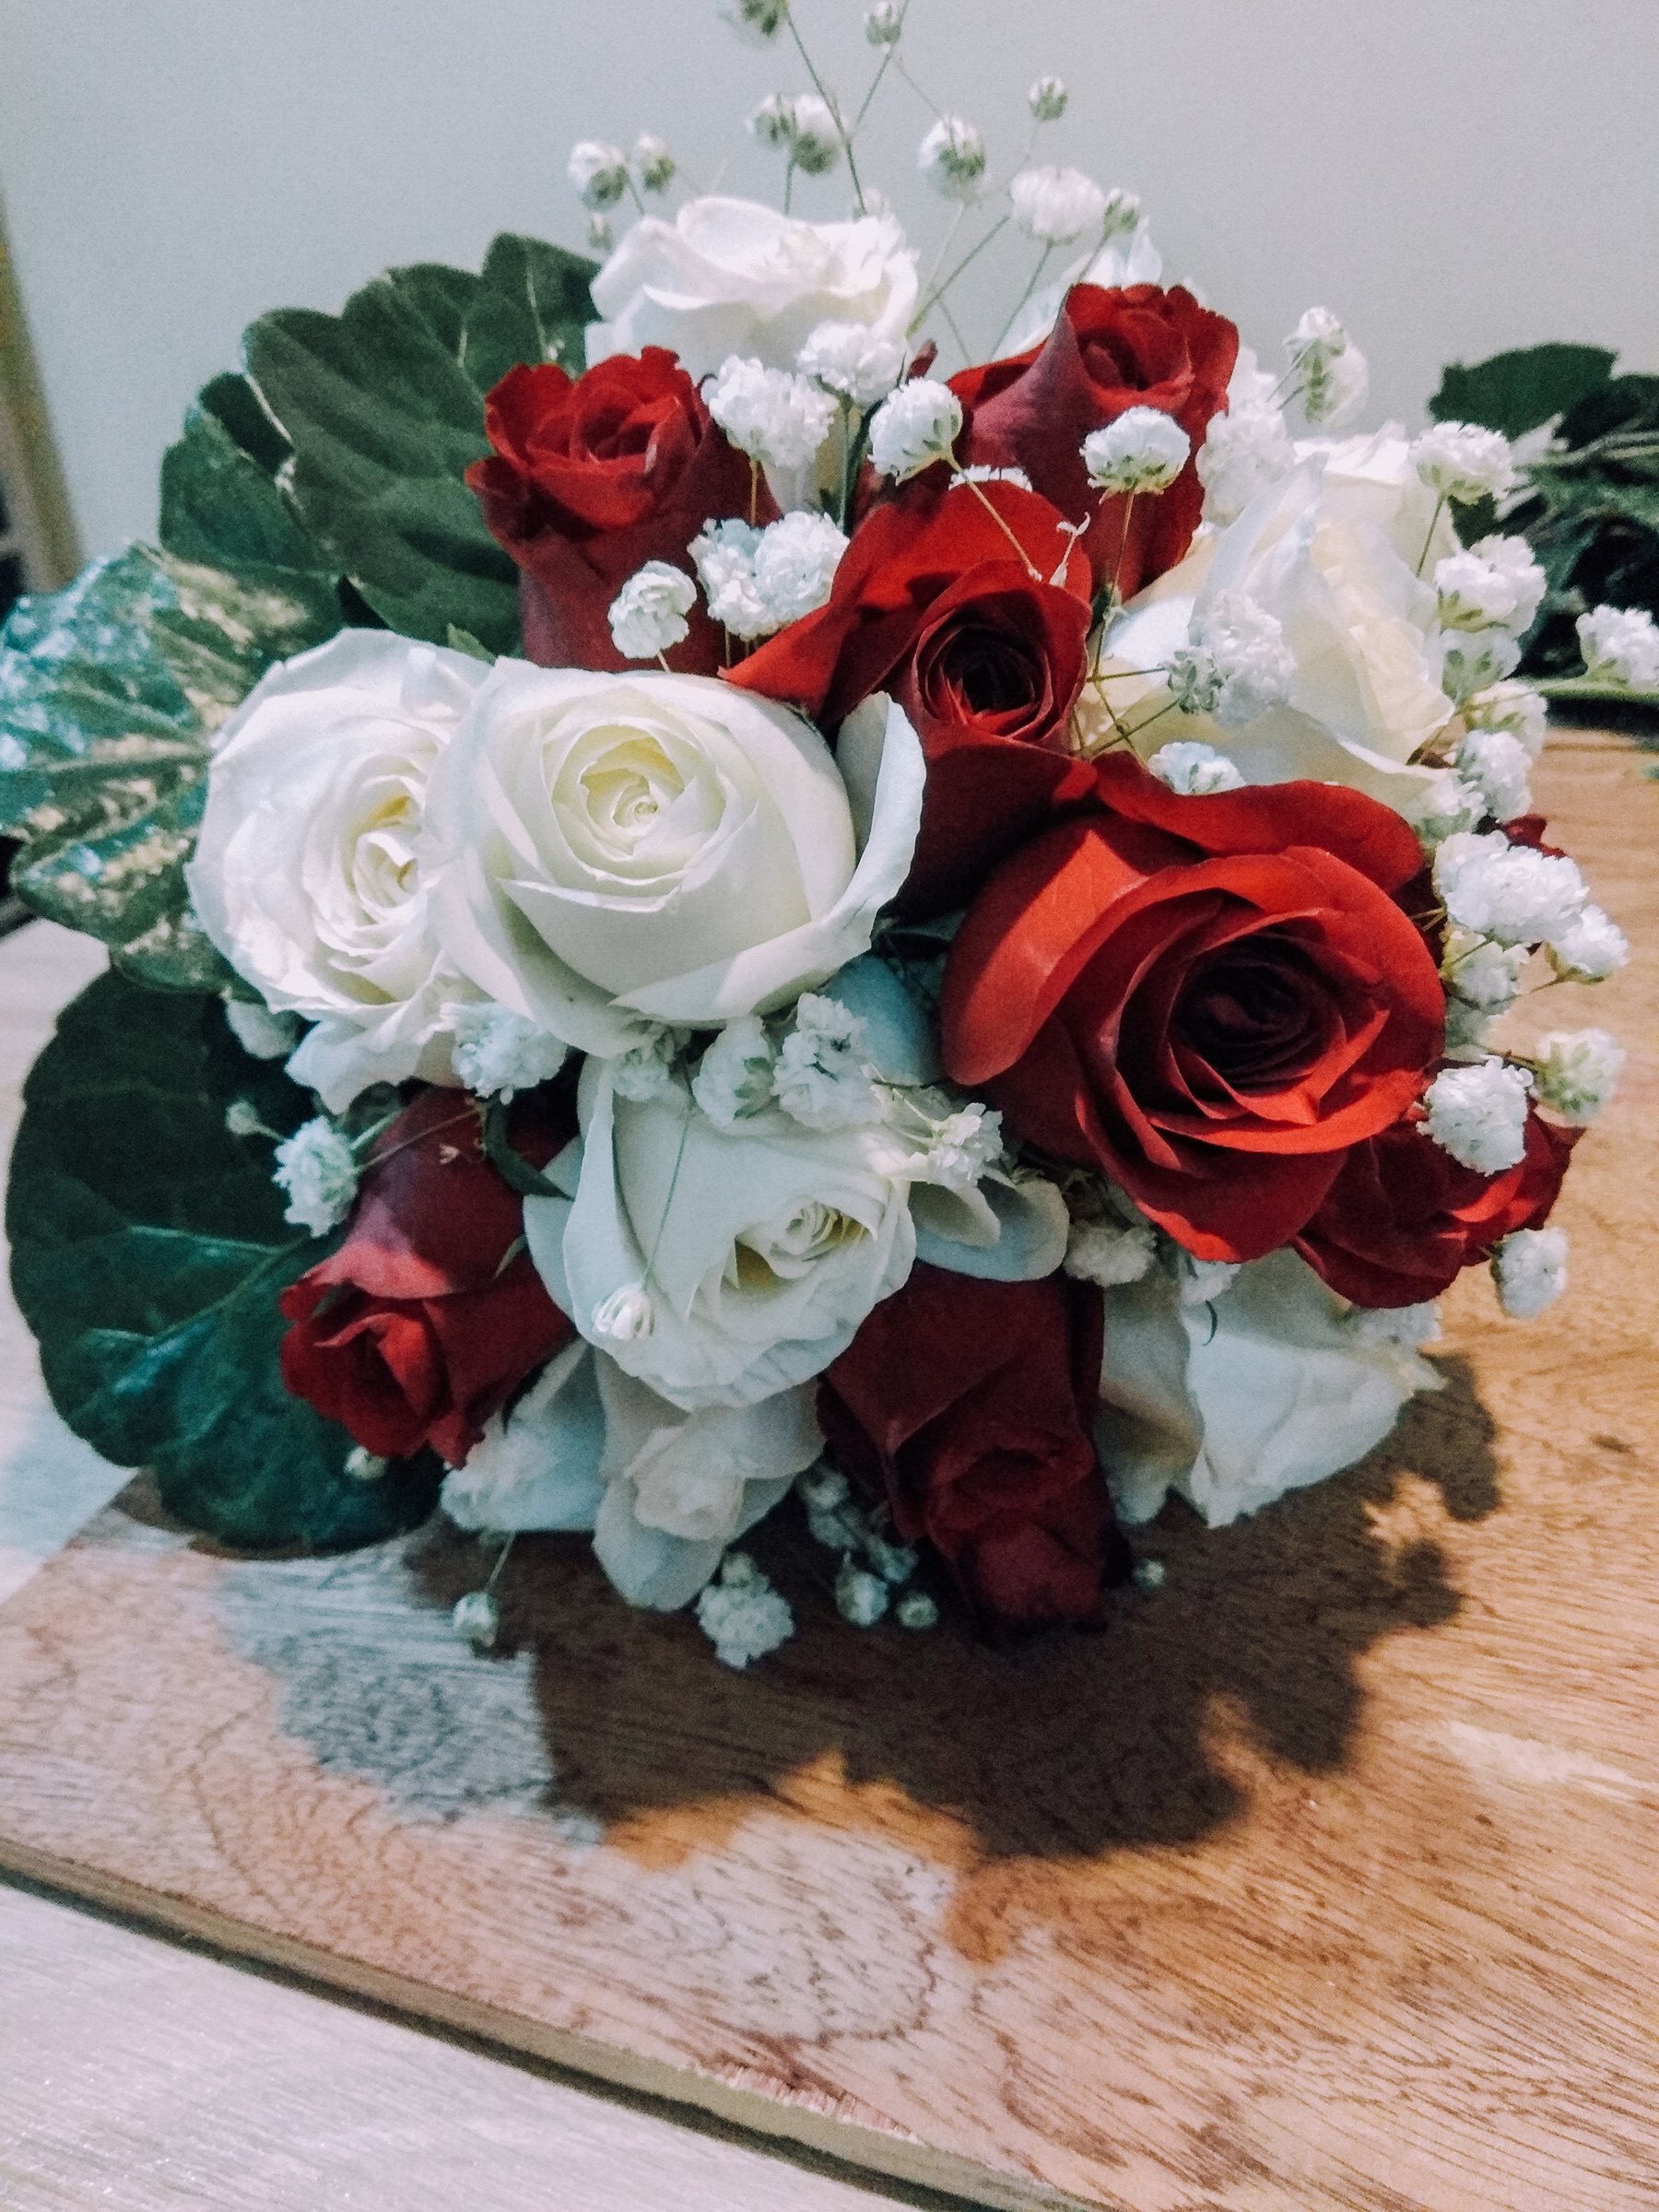 Hand made Bridal Hand Bouquet